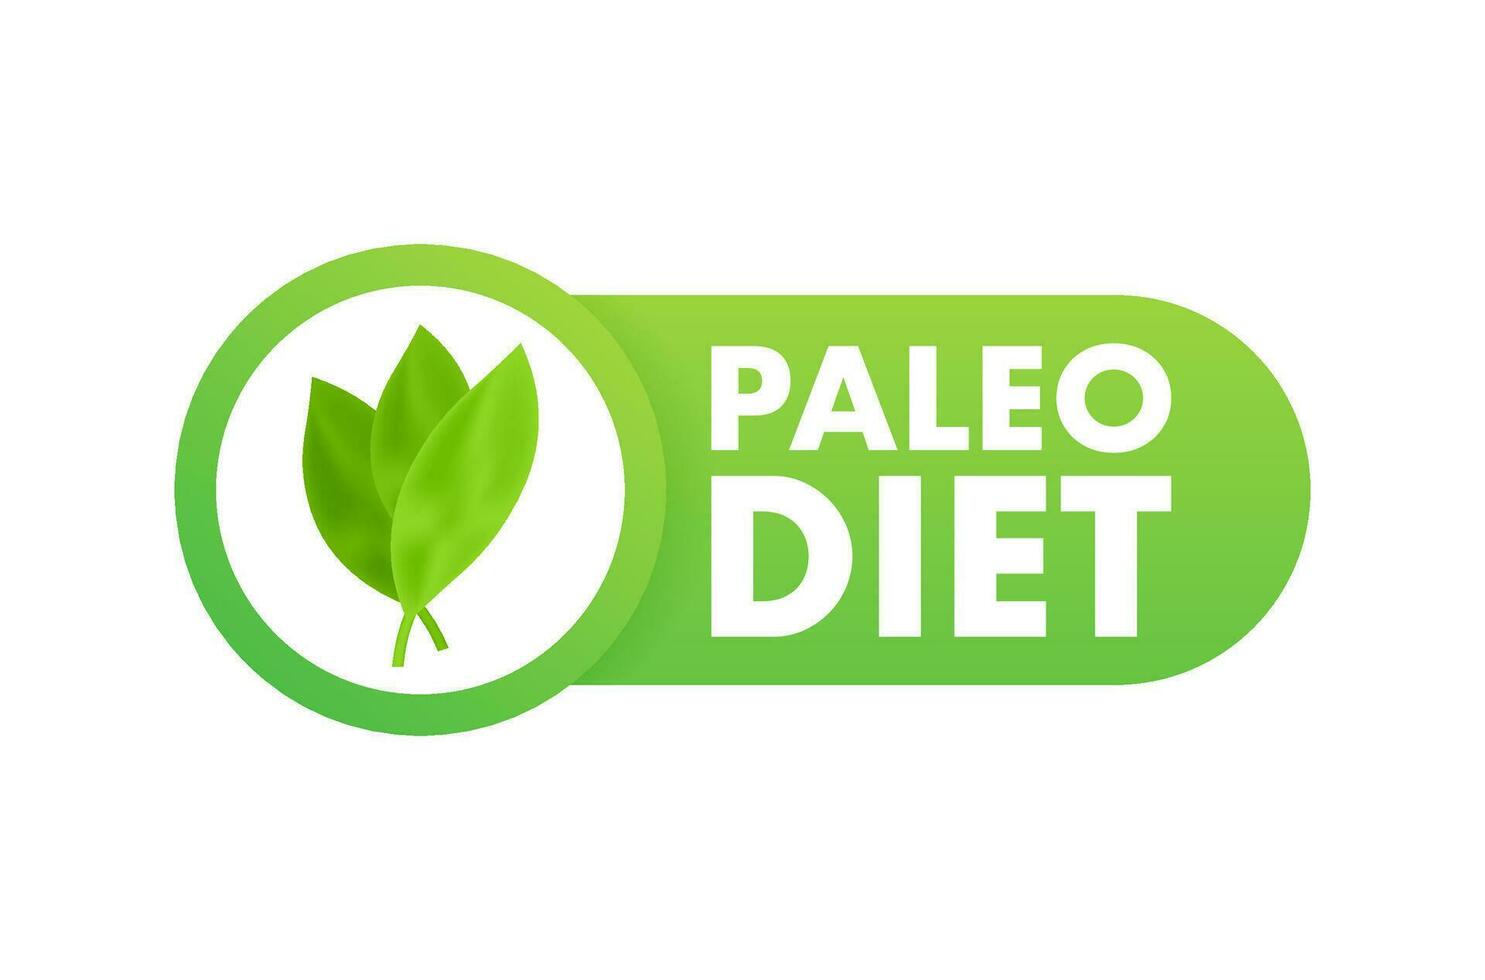 Paleo diet sign, label. Diet menu. Clean Eating Concept. Vector stock illustration